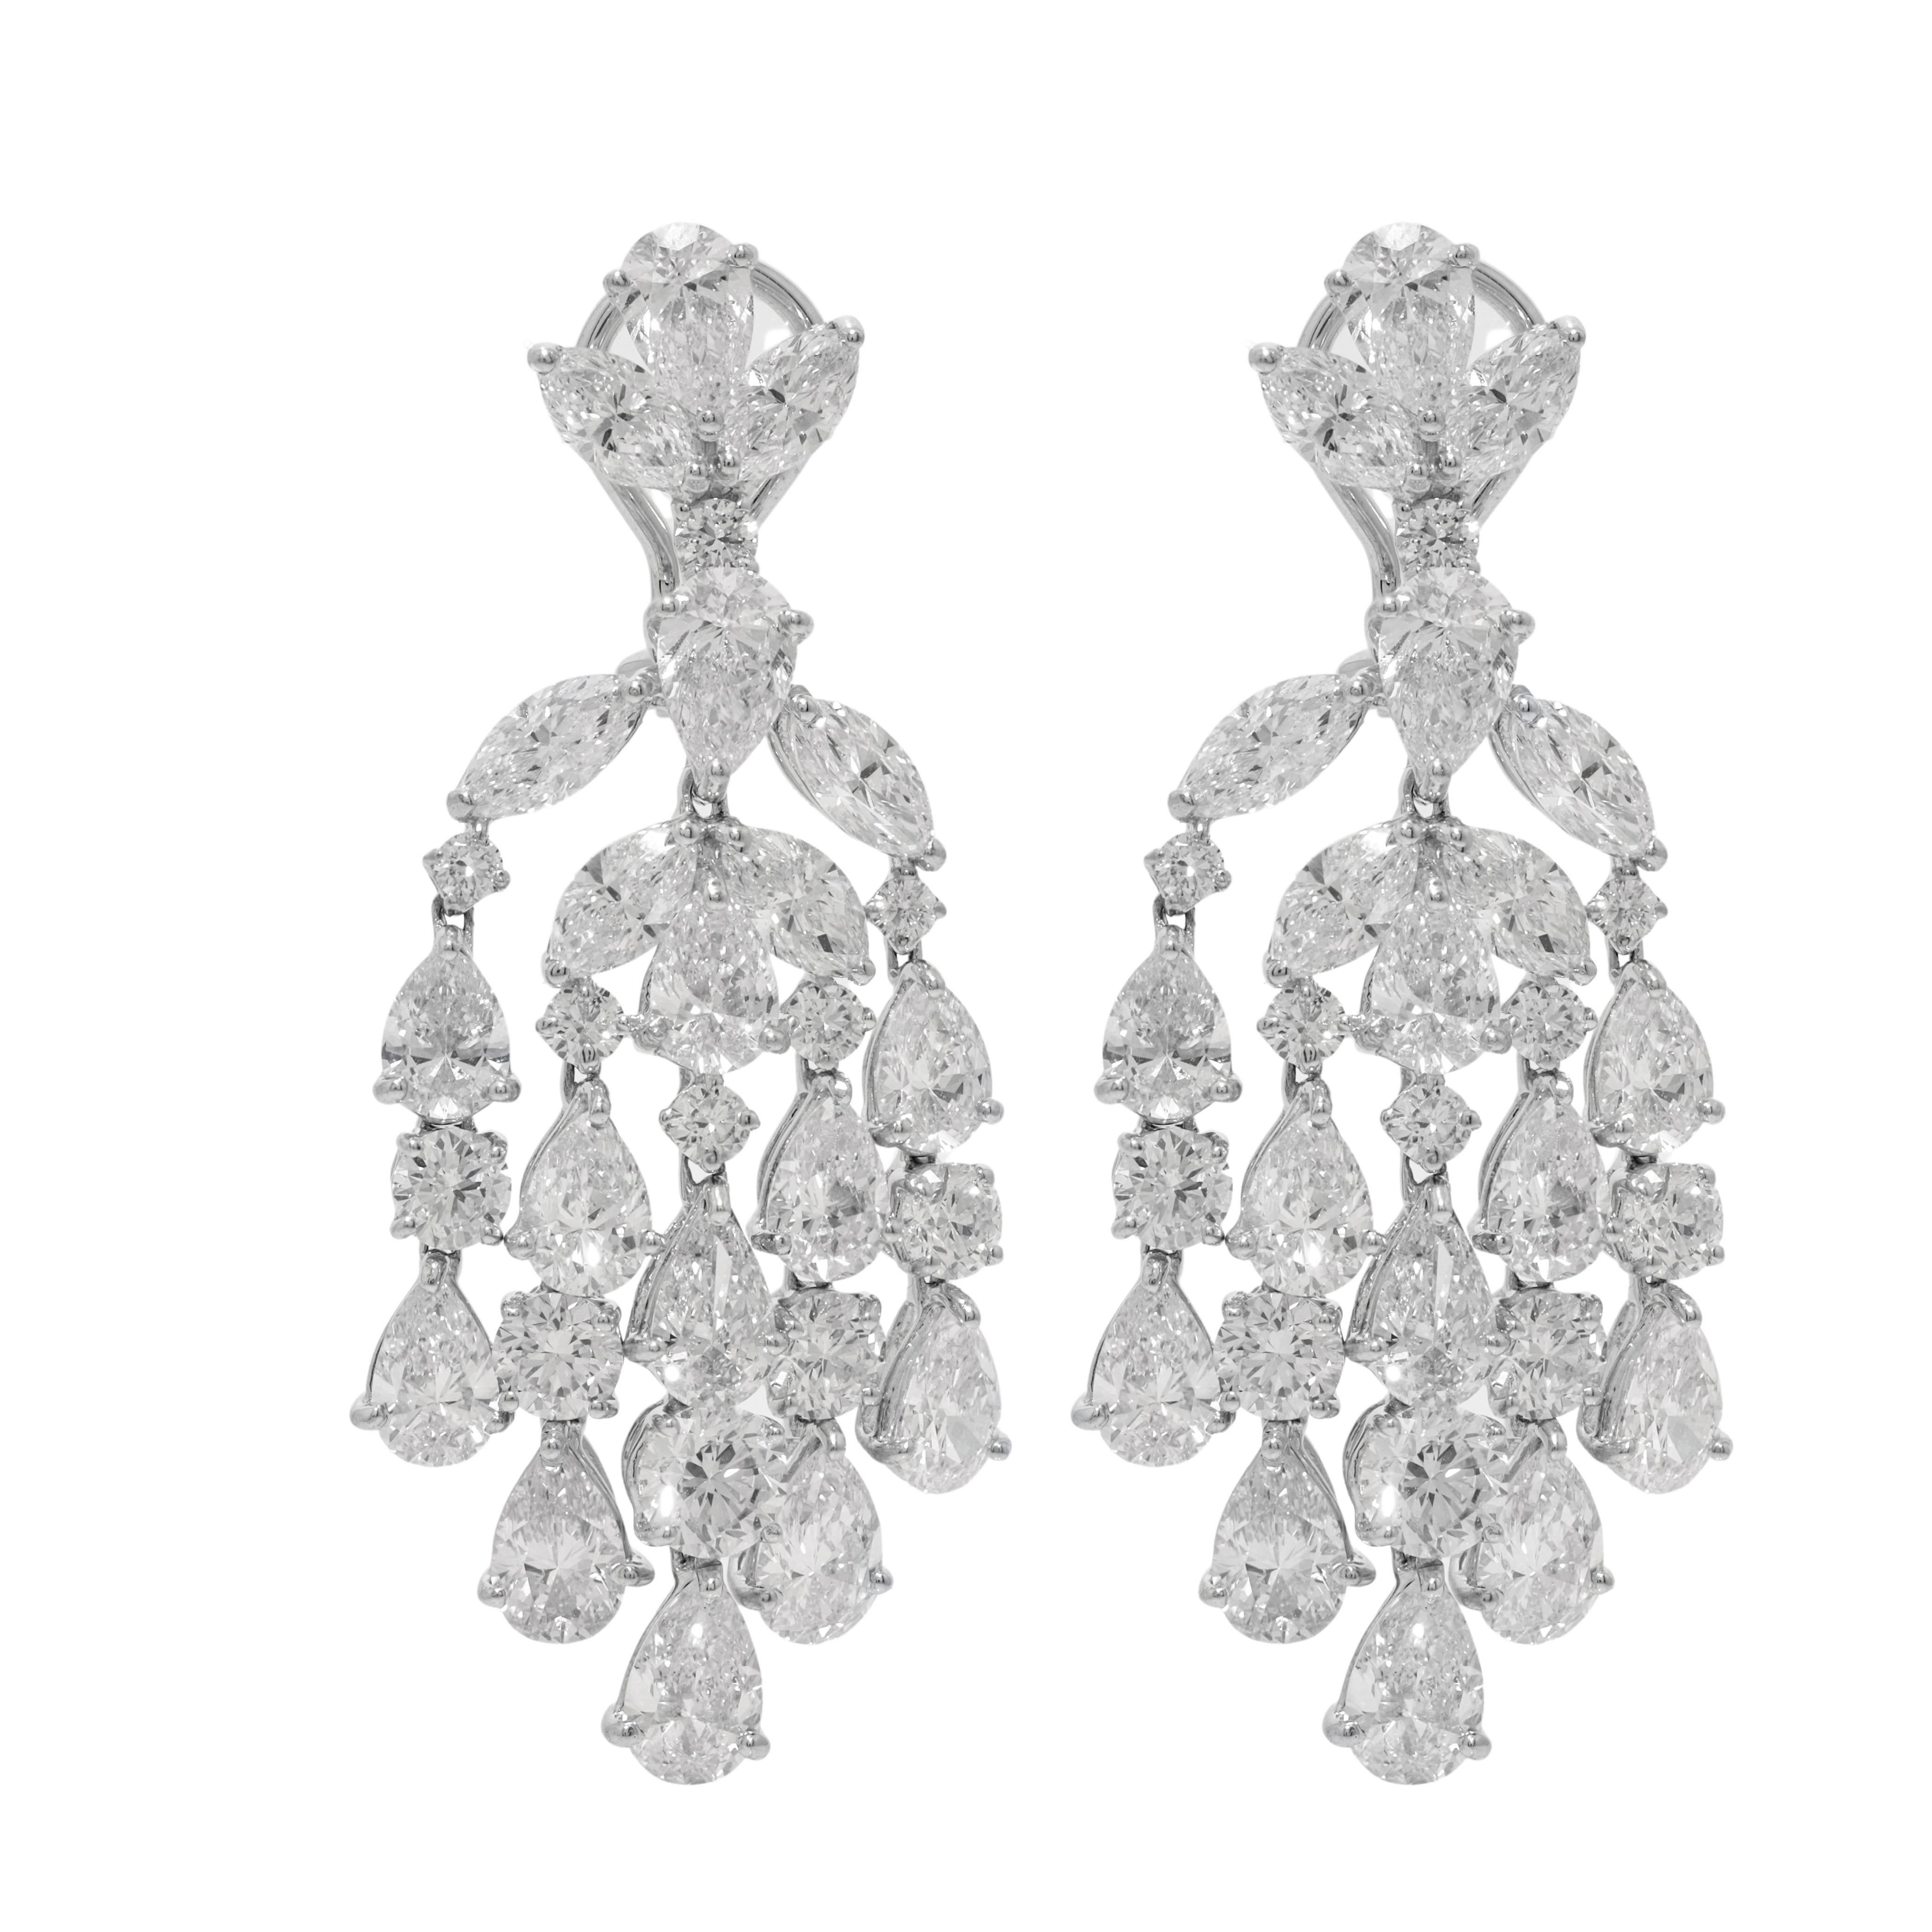 Mixed Cut DIANA M. 21.05 Carat Chandelier Cluster Diamond Earrings For Sale